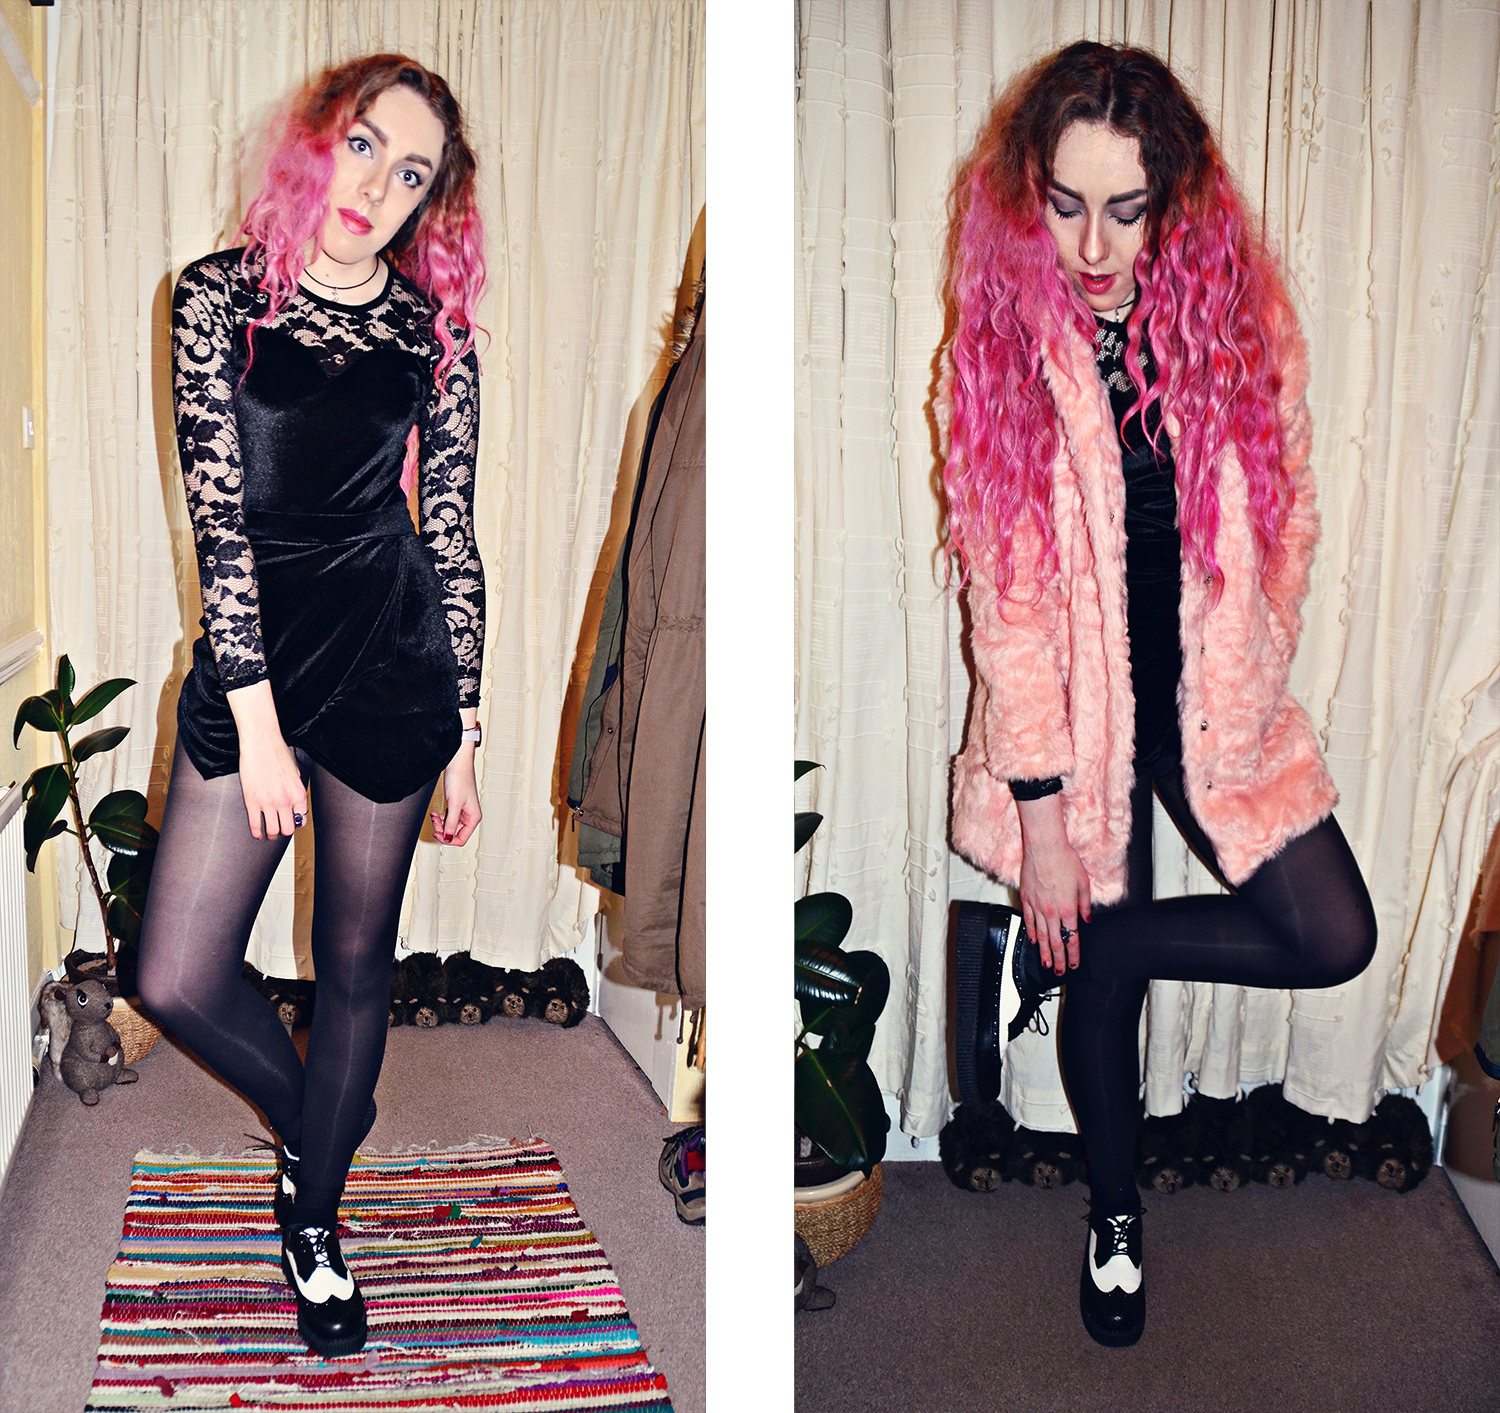 Stephi LaReine, Liverpool, UK Based Fashion & Lifestyle Blogger with pink hair